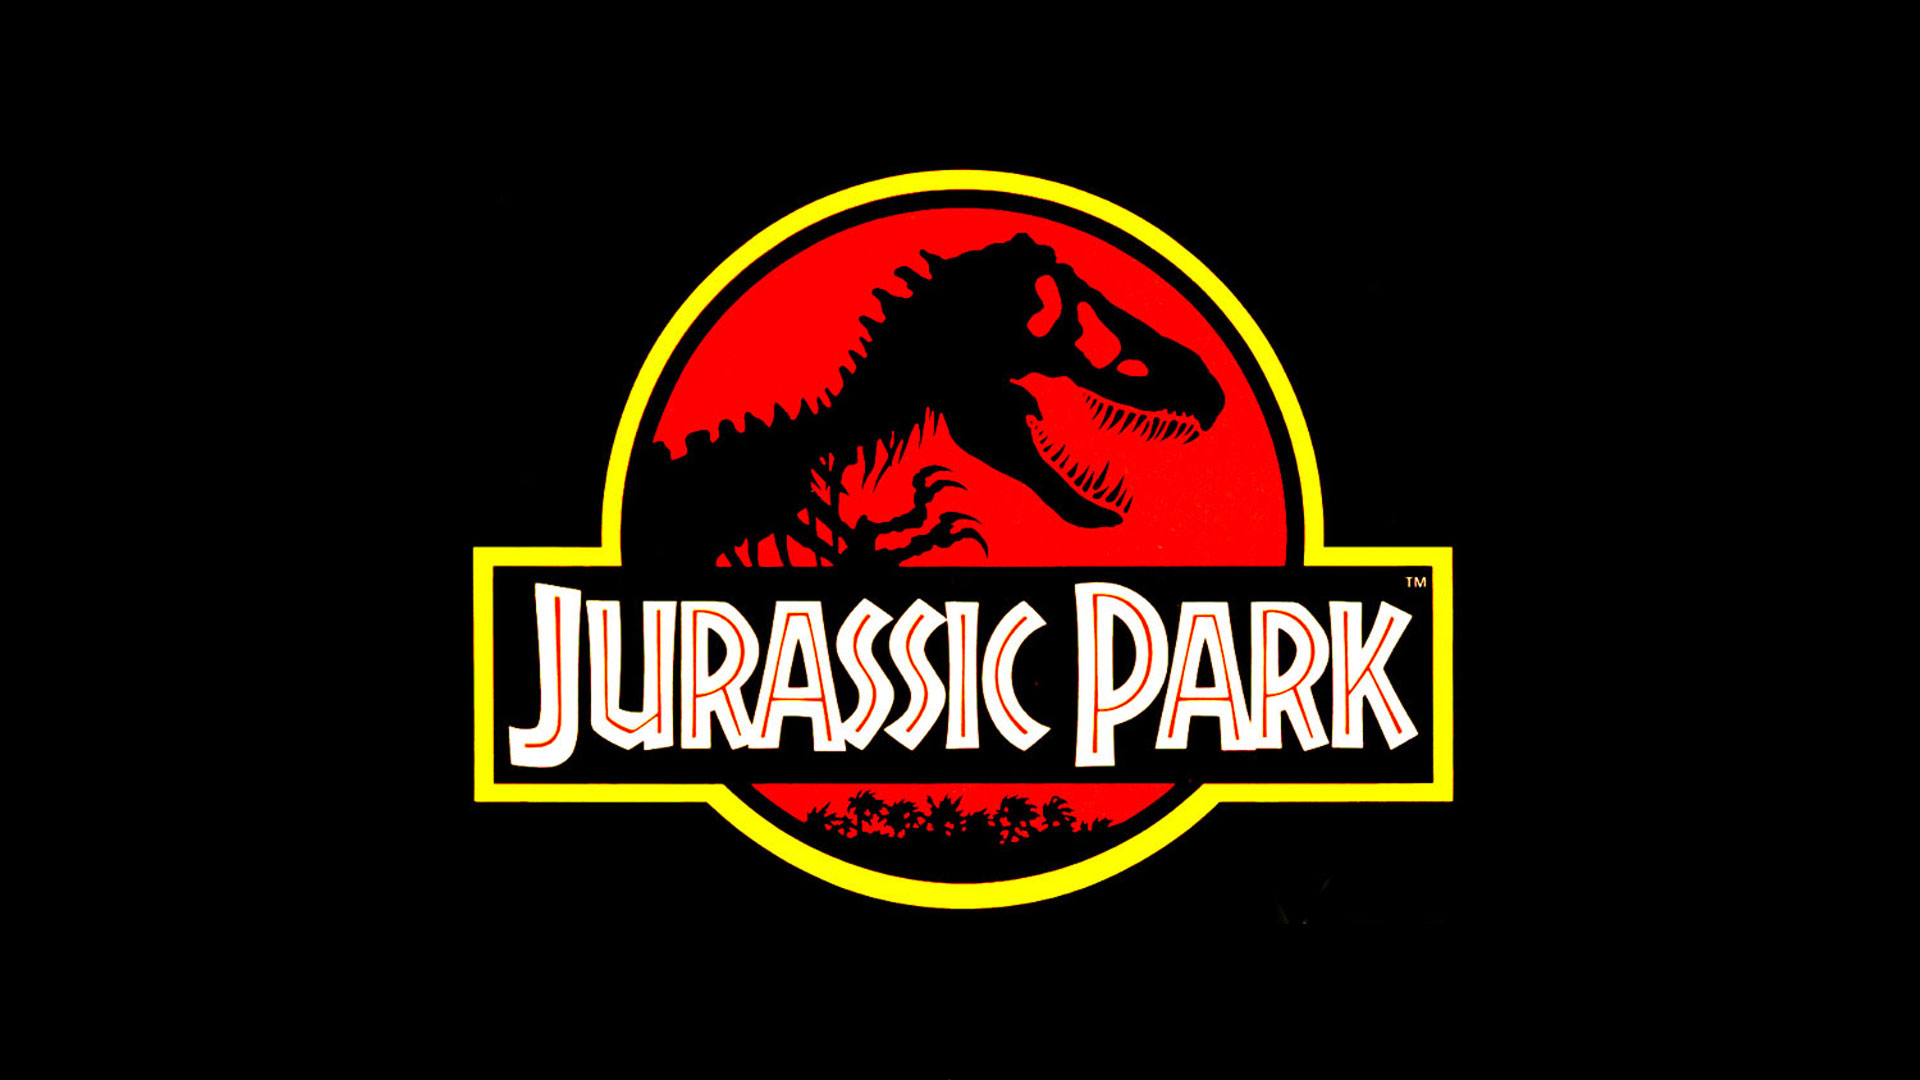 Jurassic Park Logo #1 – PS4Wallpapers.com